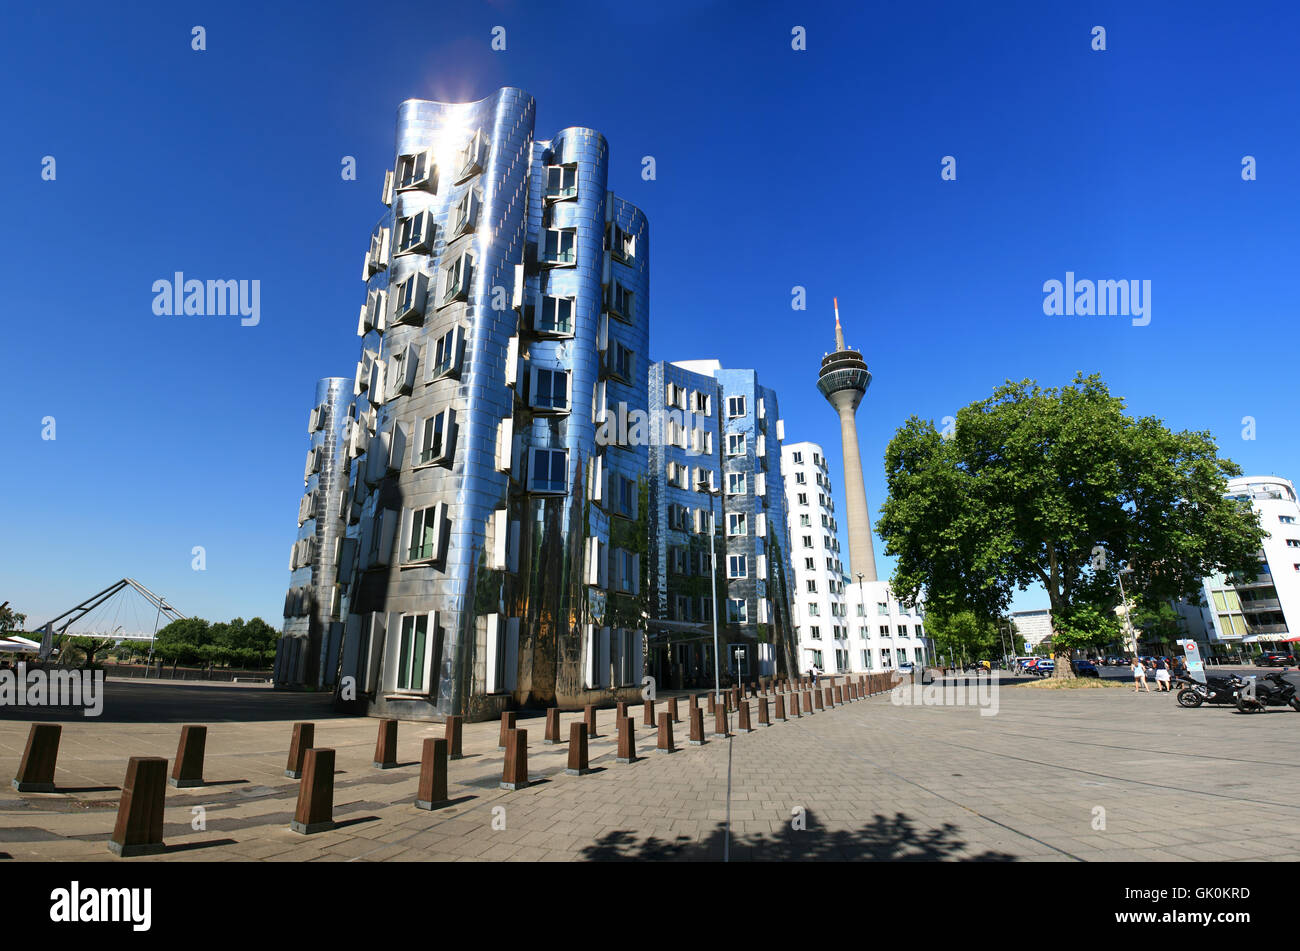 germany german federal republic facade Stock Photo